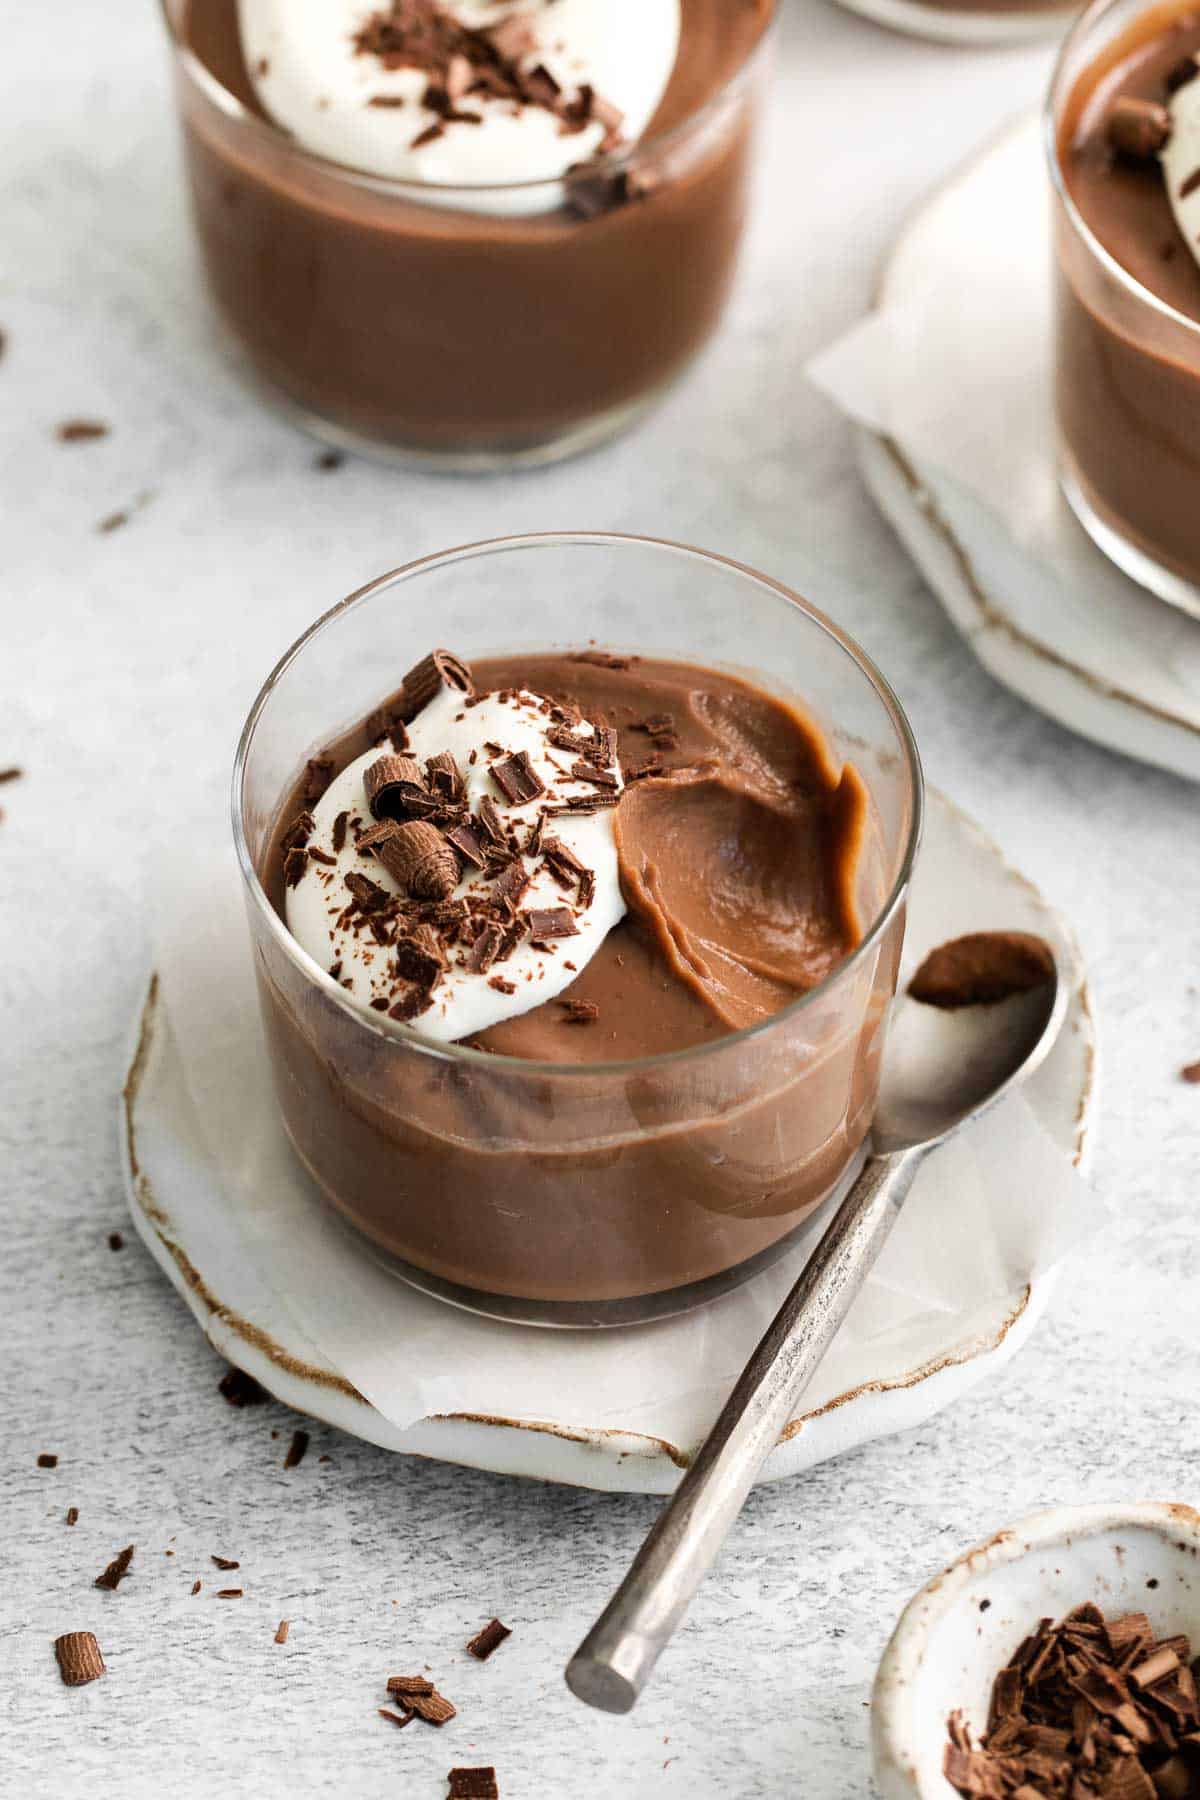 A glass ramekin filled with chocolate pudding